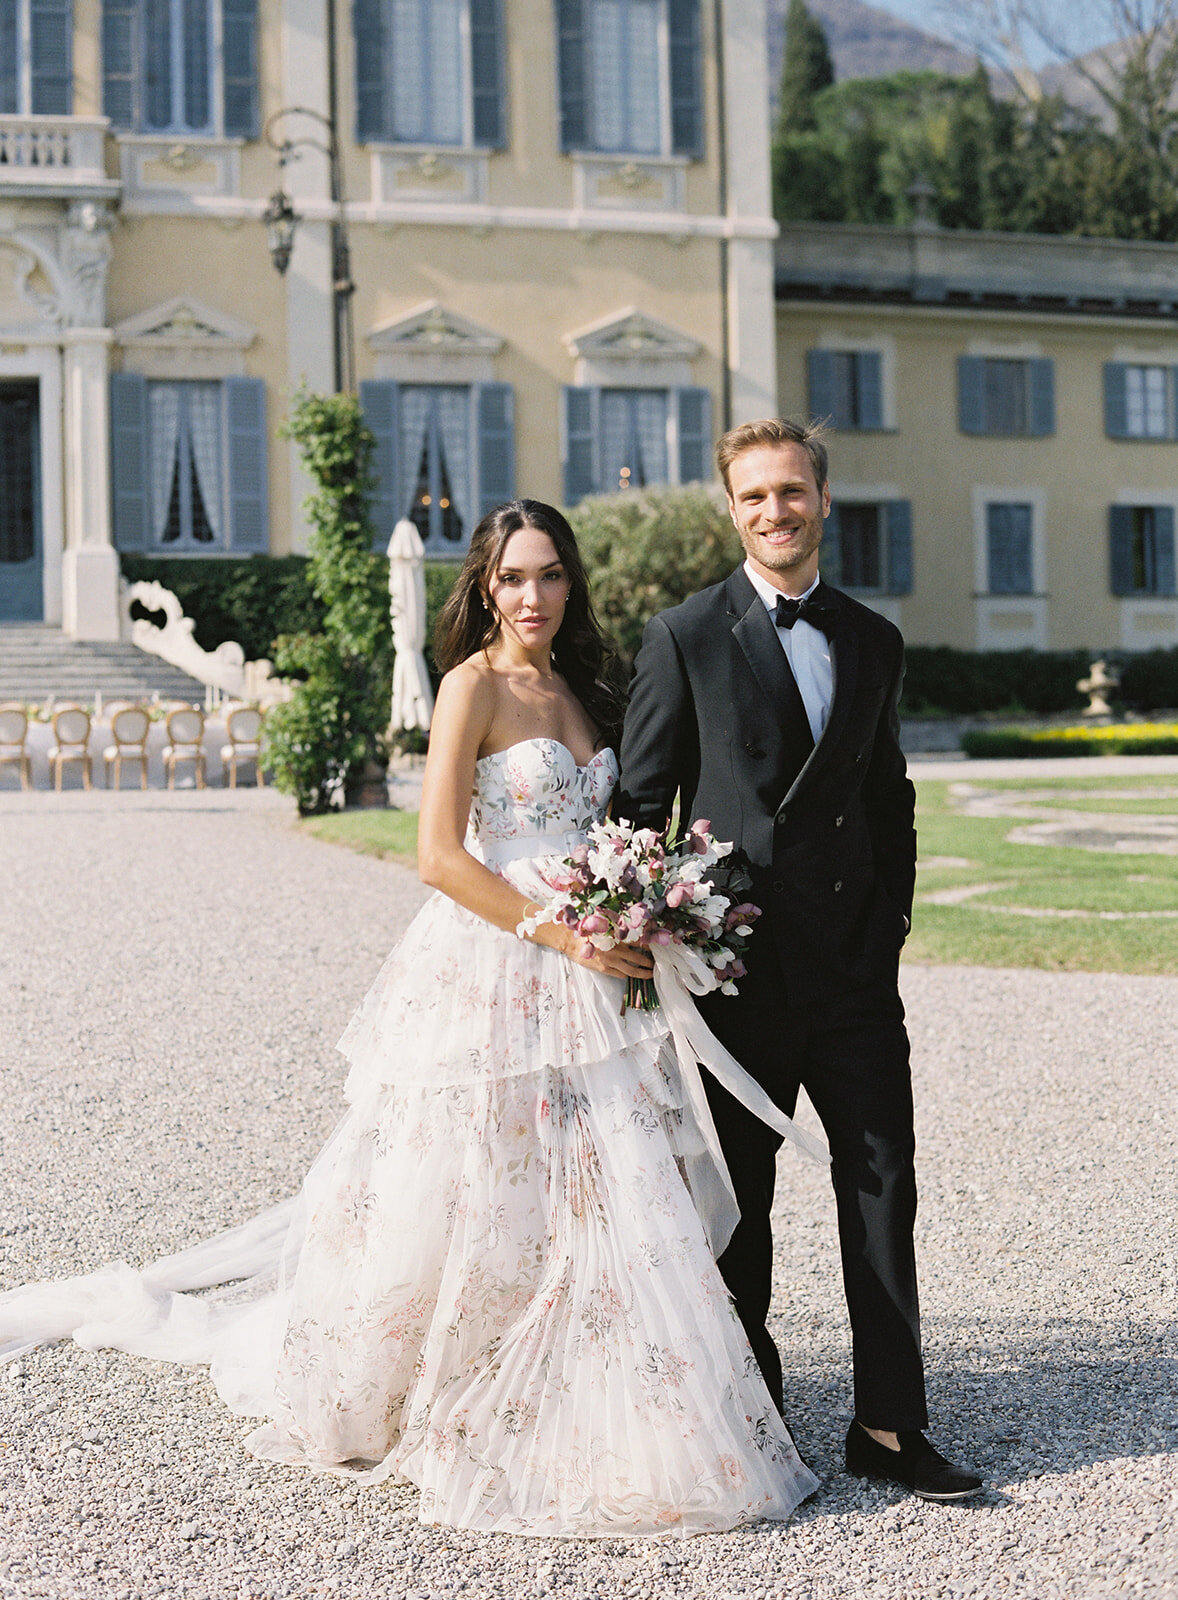 Villa-Sola-Cabiati Wedding Photographer-122